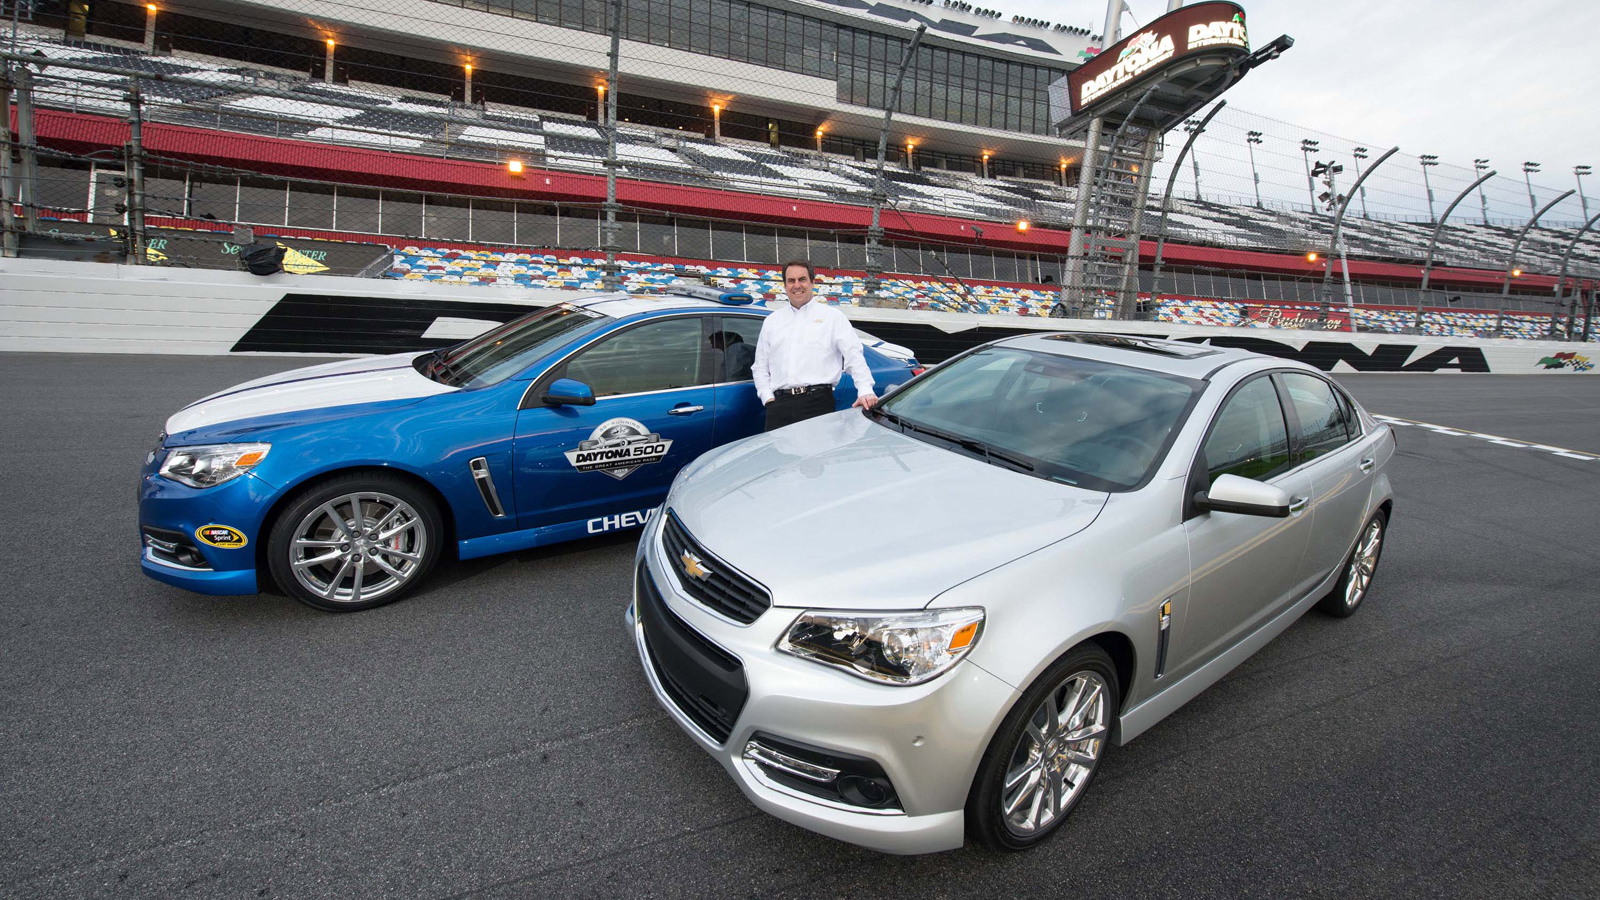 2014 Chevrolet SS at its debut at the Daytona International Speedway